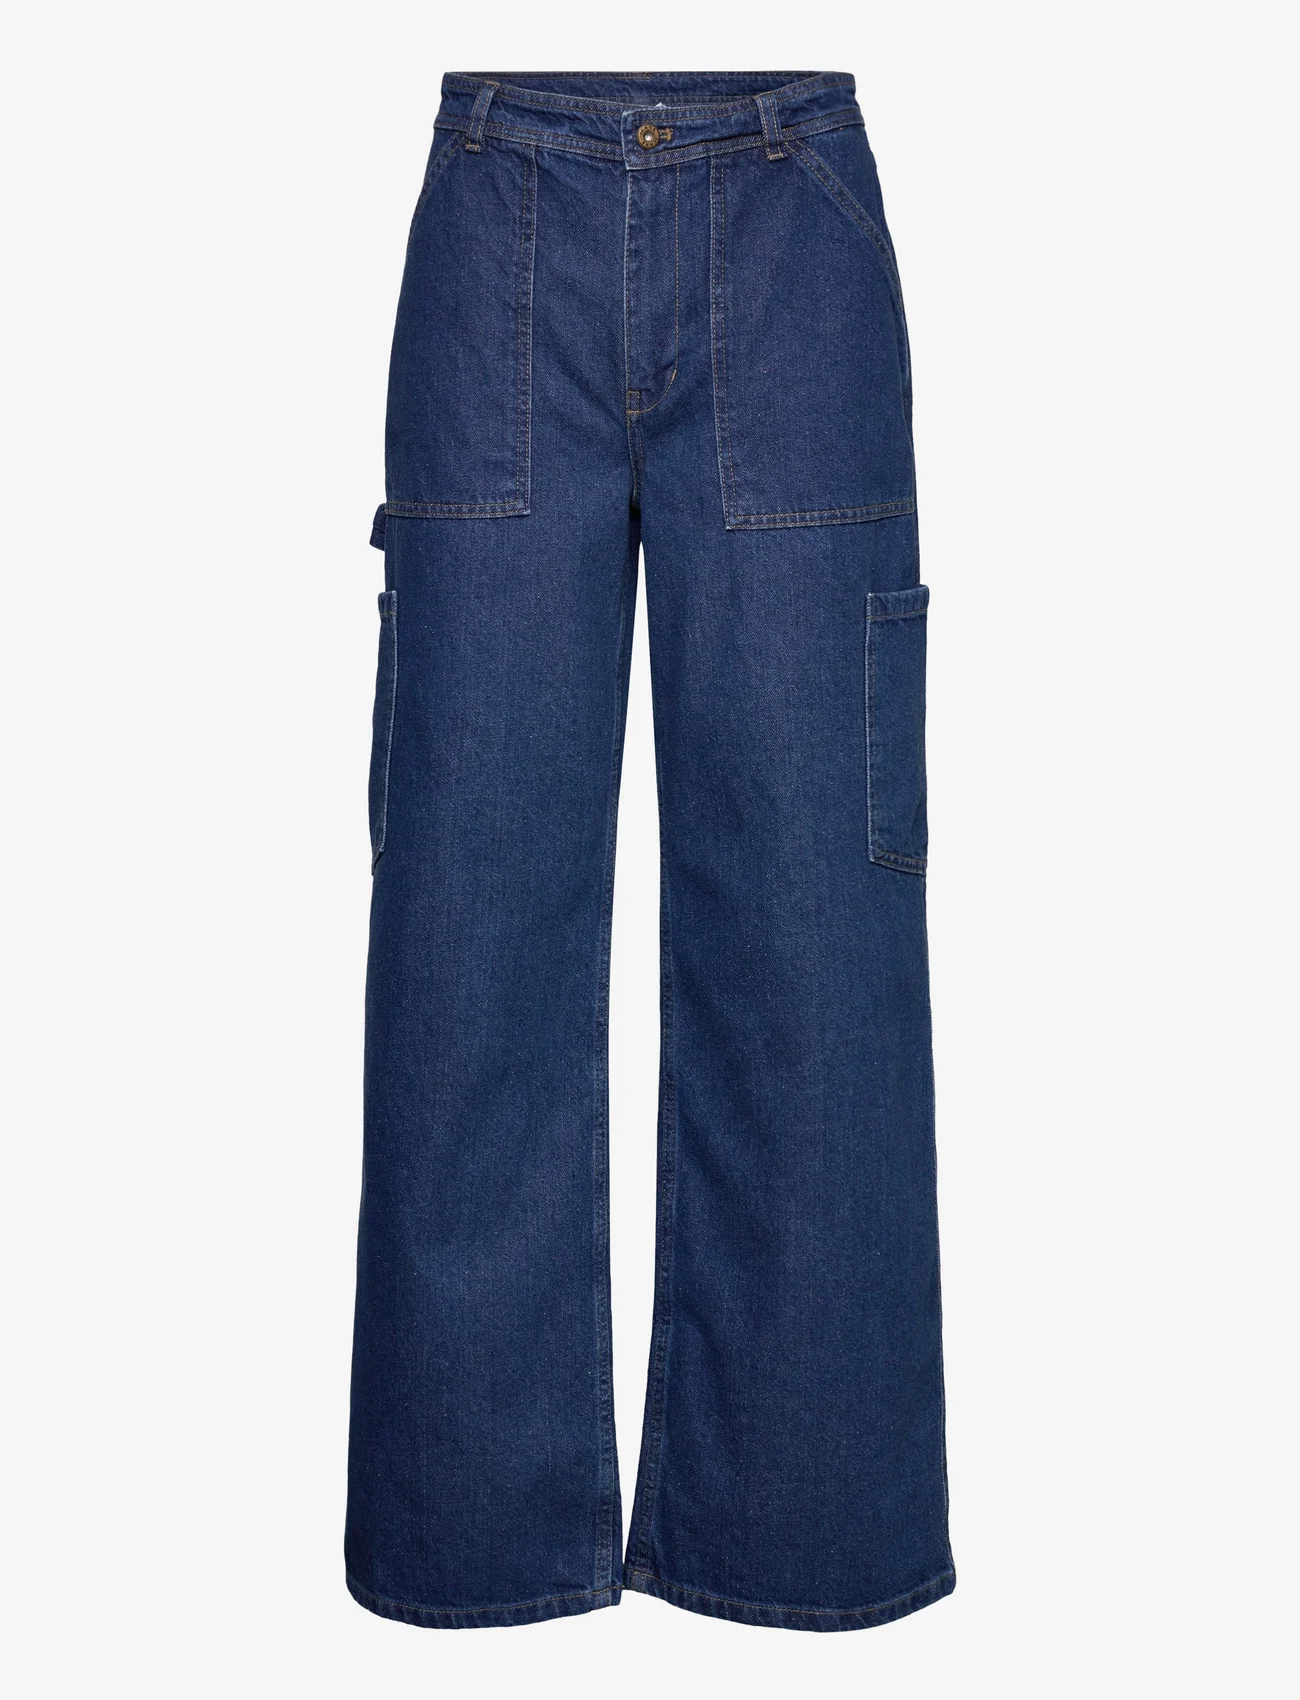 H2O Fagerholt - Only bad jeans - laia säärega teksad - dark blue denim - 0